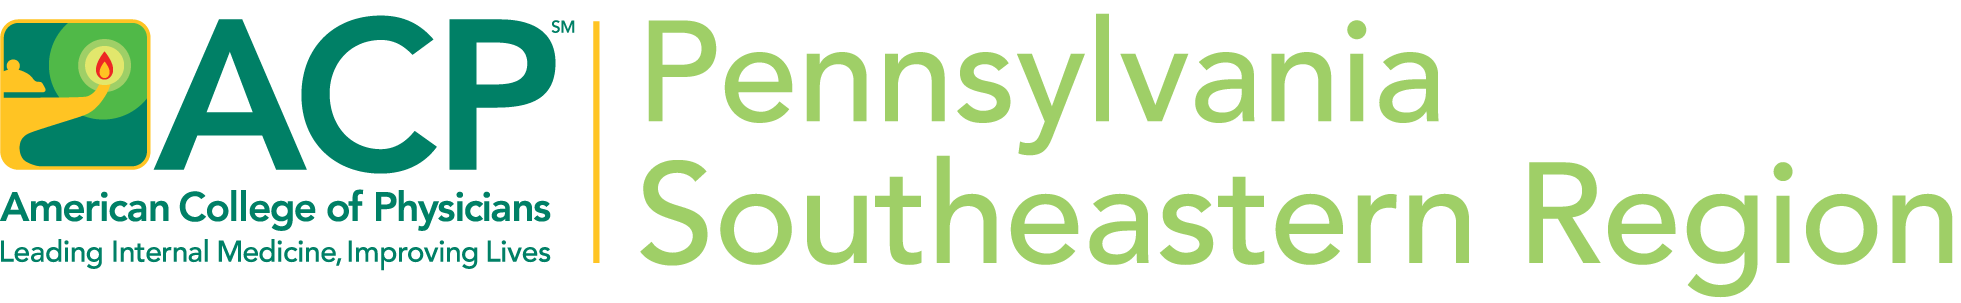 pennsylvania-southeastern-chapter-logo-4c_orig